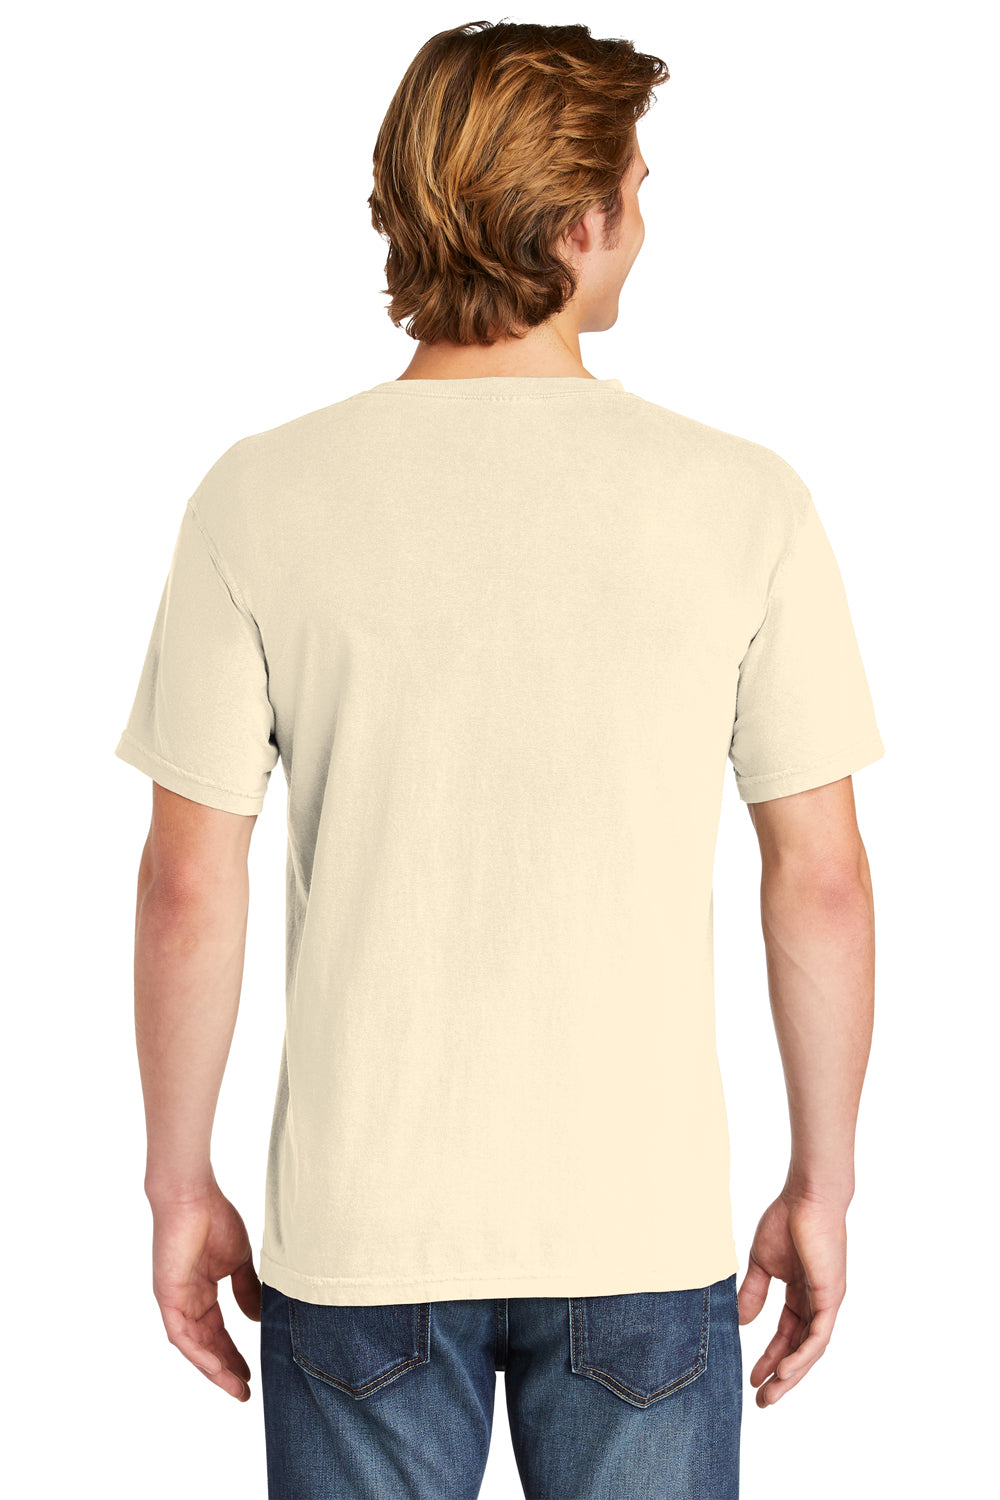 Comfort Colors Mens Short Sleeve Crewneck T-Shirt Ivory Back